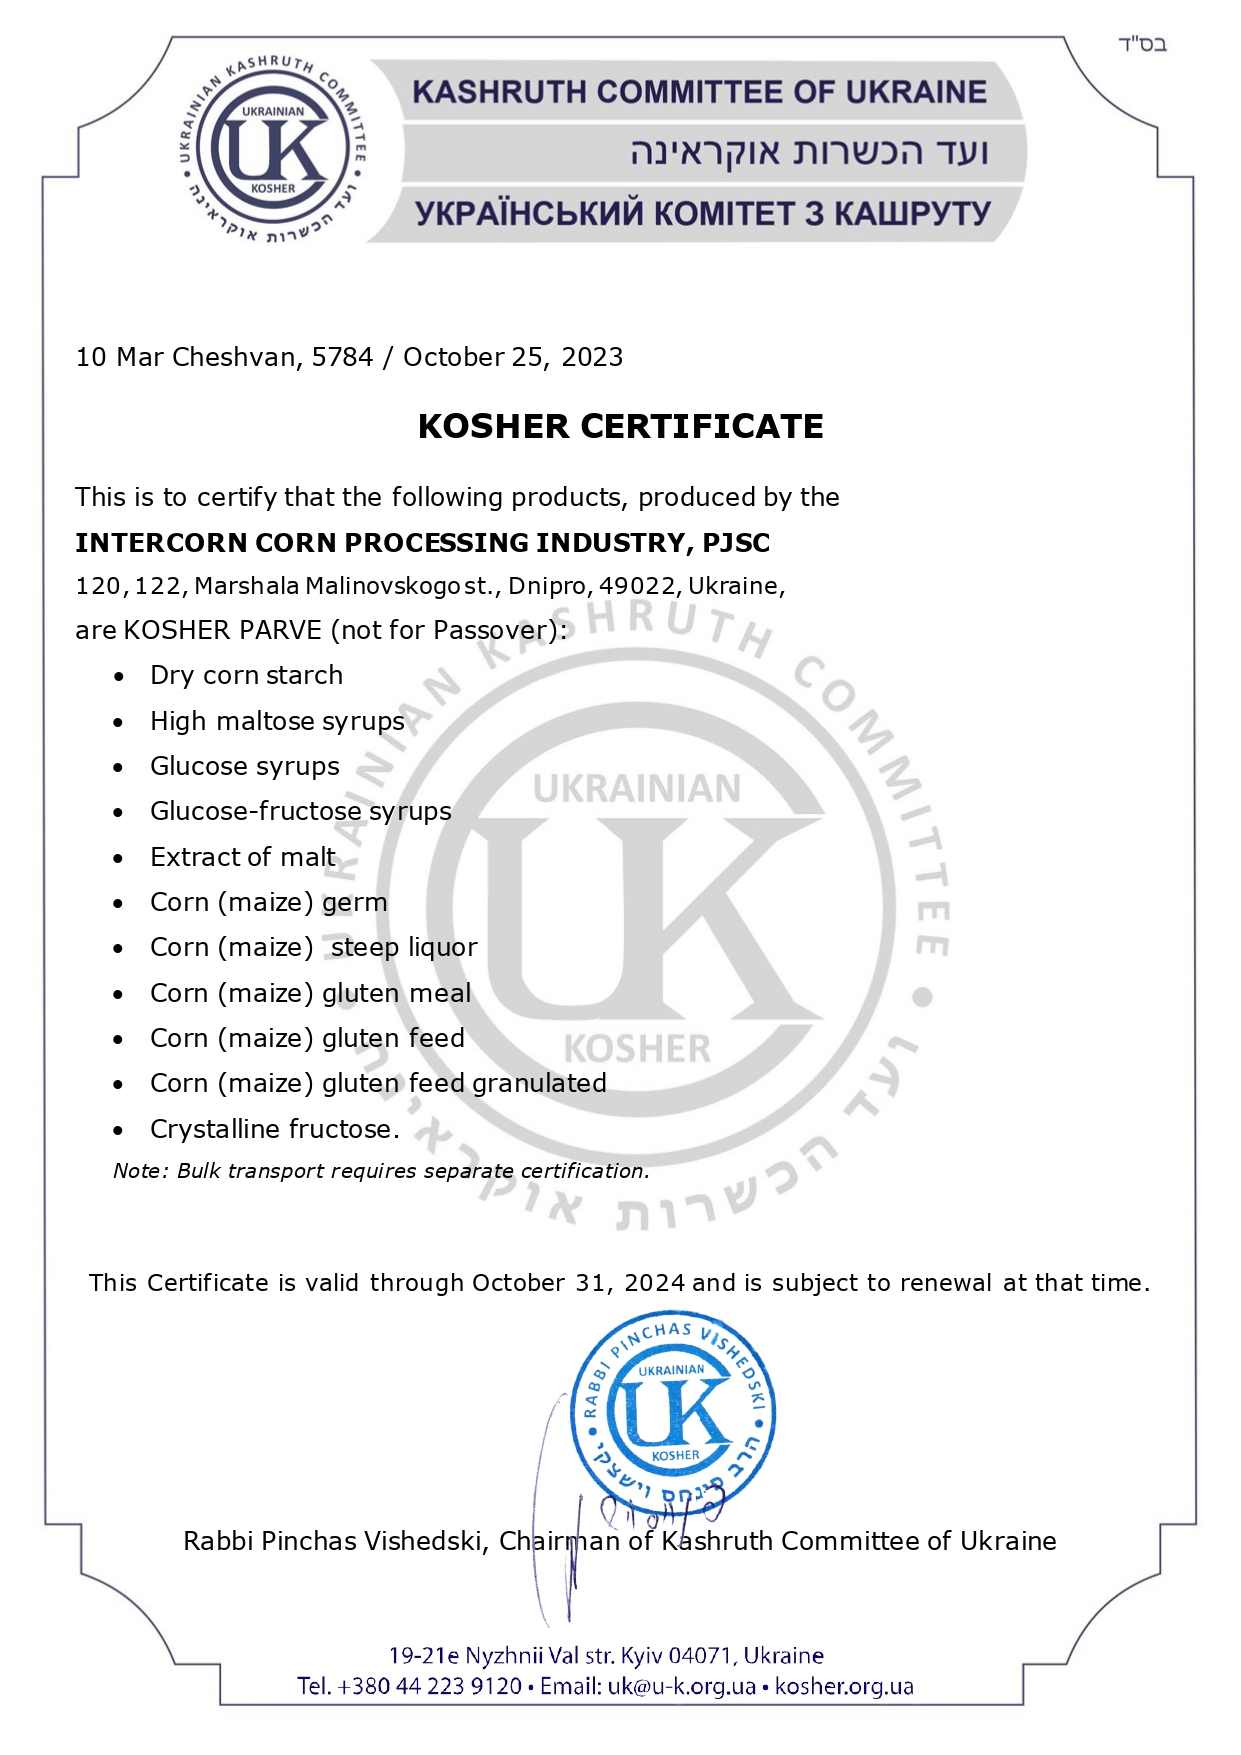 Kosher Certificate Intercorn Corn Processing Industry, PJSC